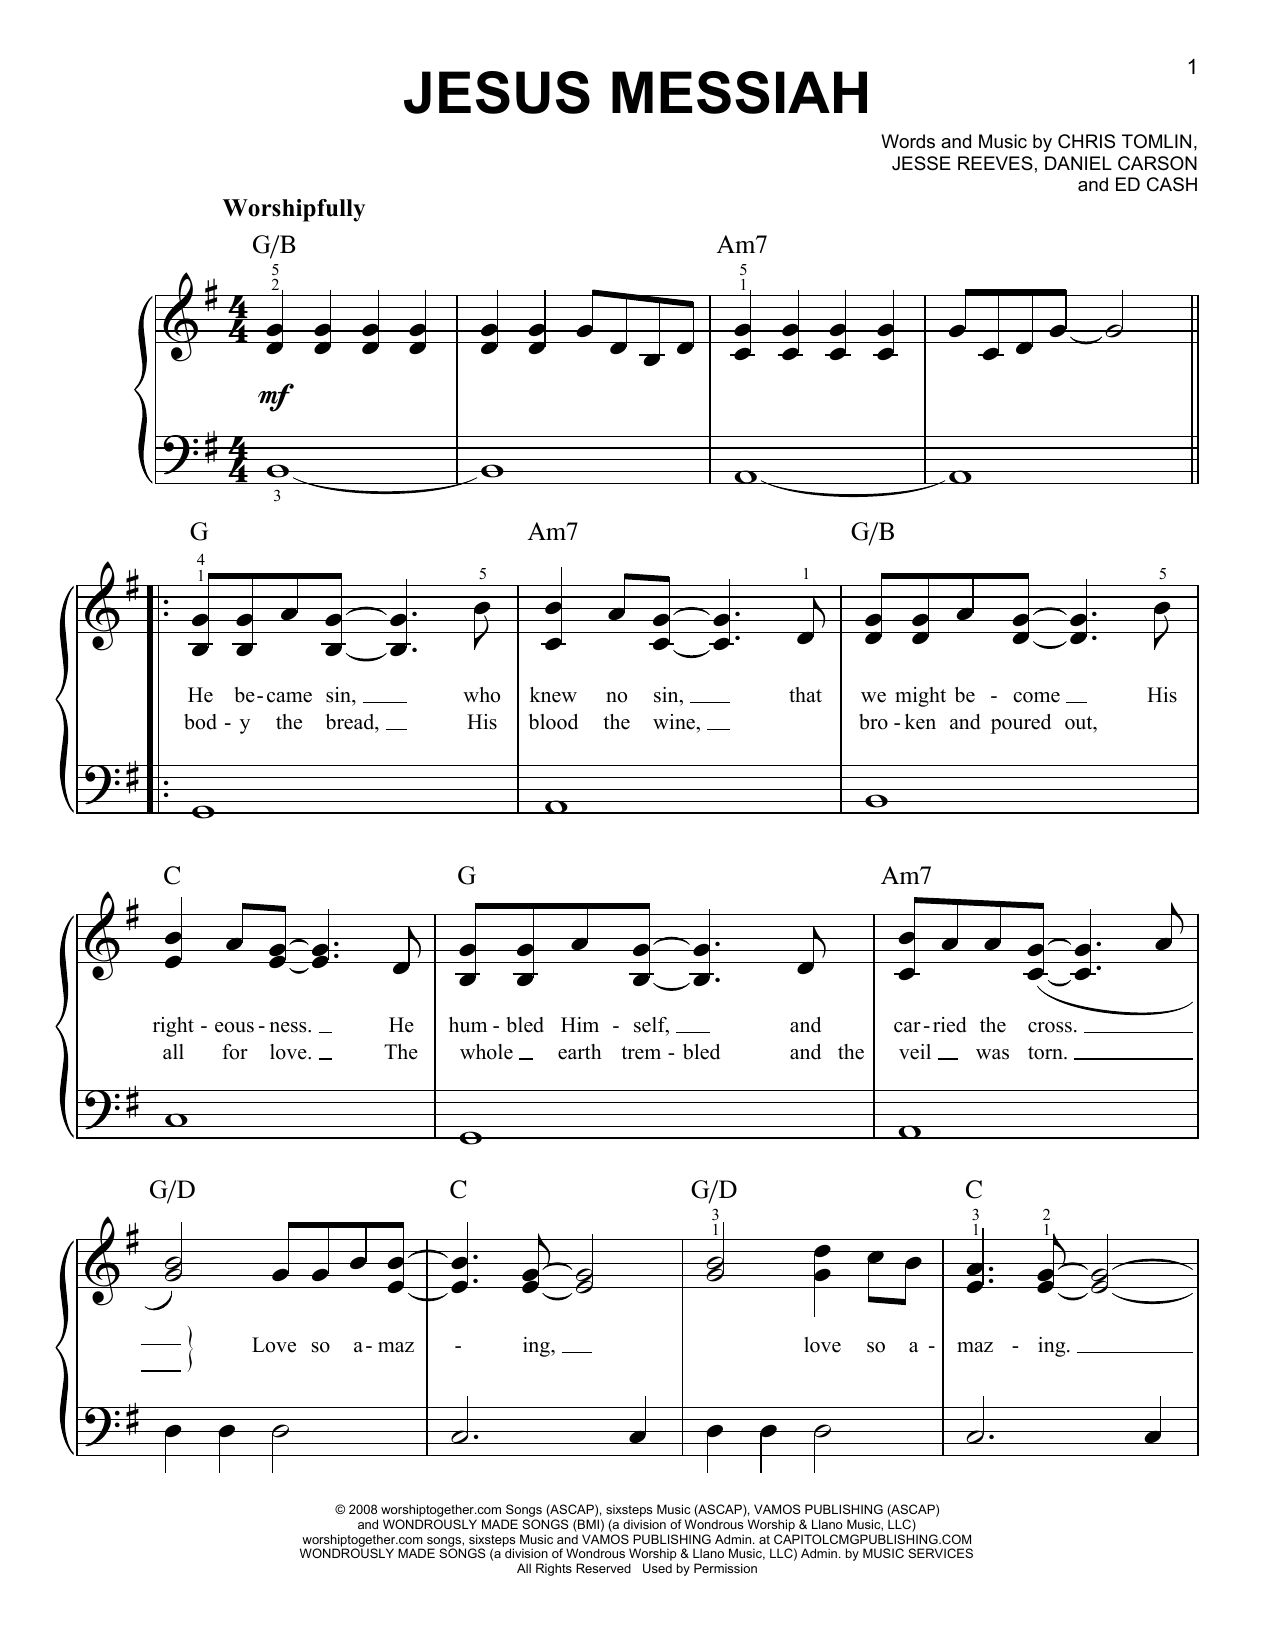 Chris Tomlin Jesus Messiah Sheet Music Notes & Chords for Piano - Download or Print PDF